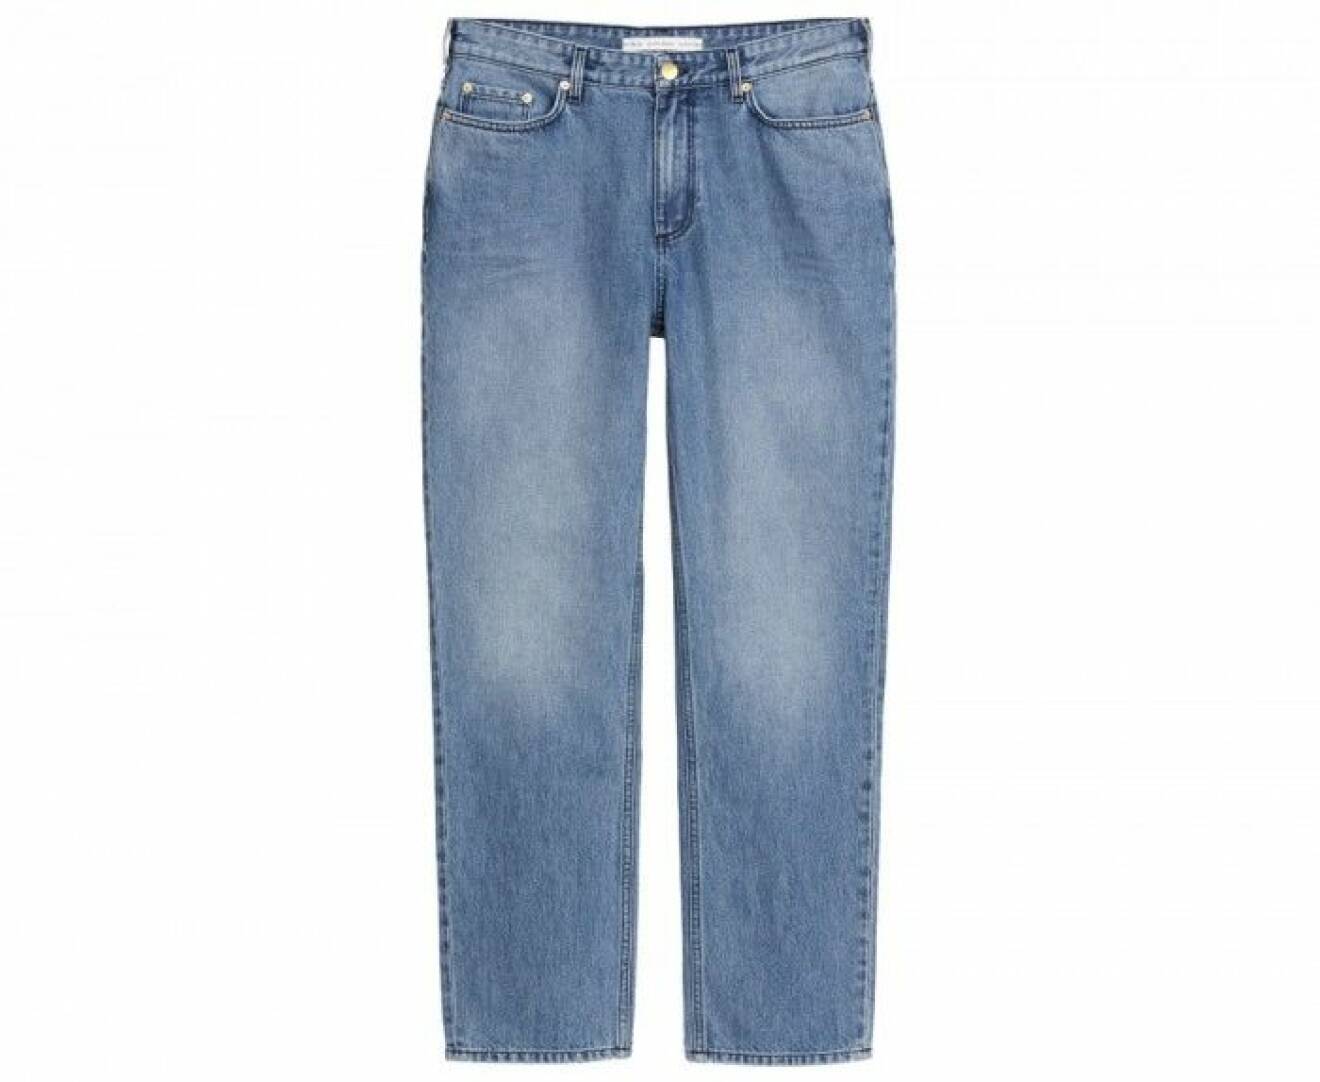 Ankellånga jeans, 550 kr, & Other Stories.